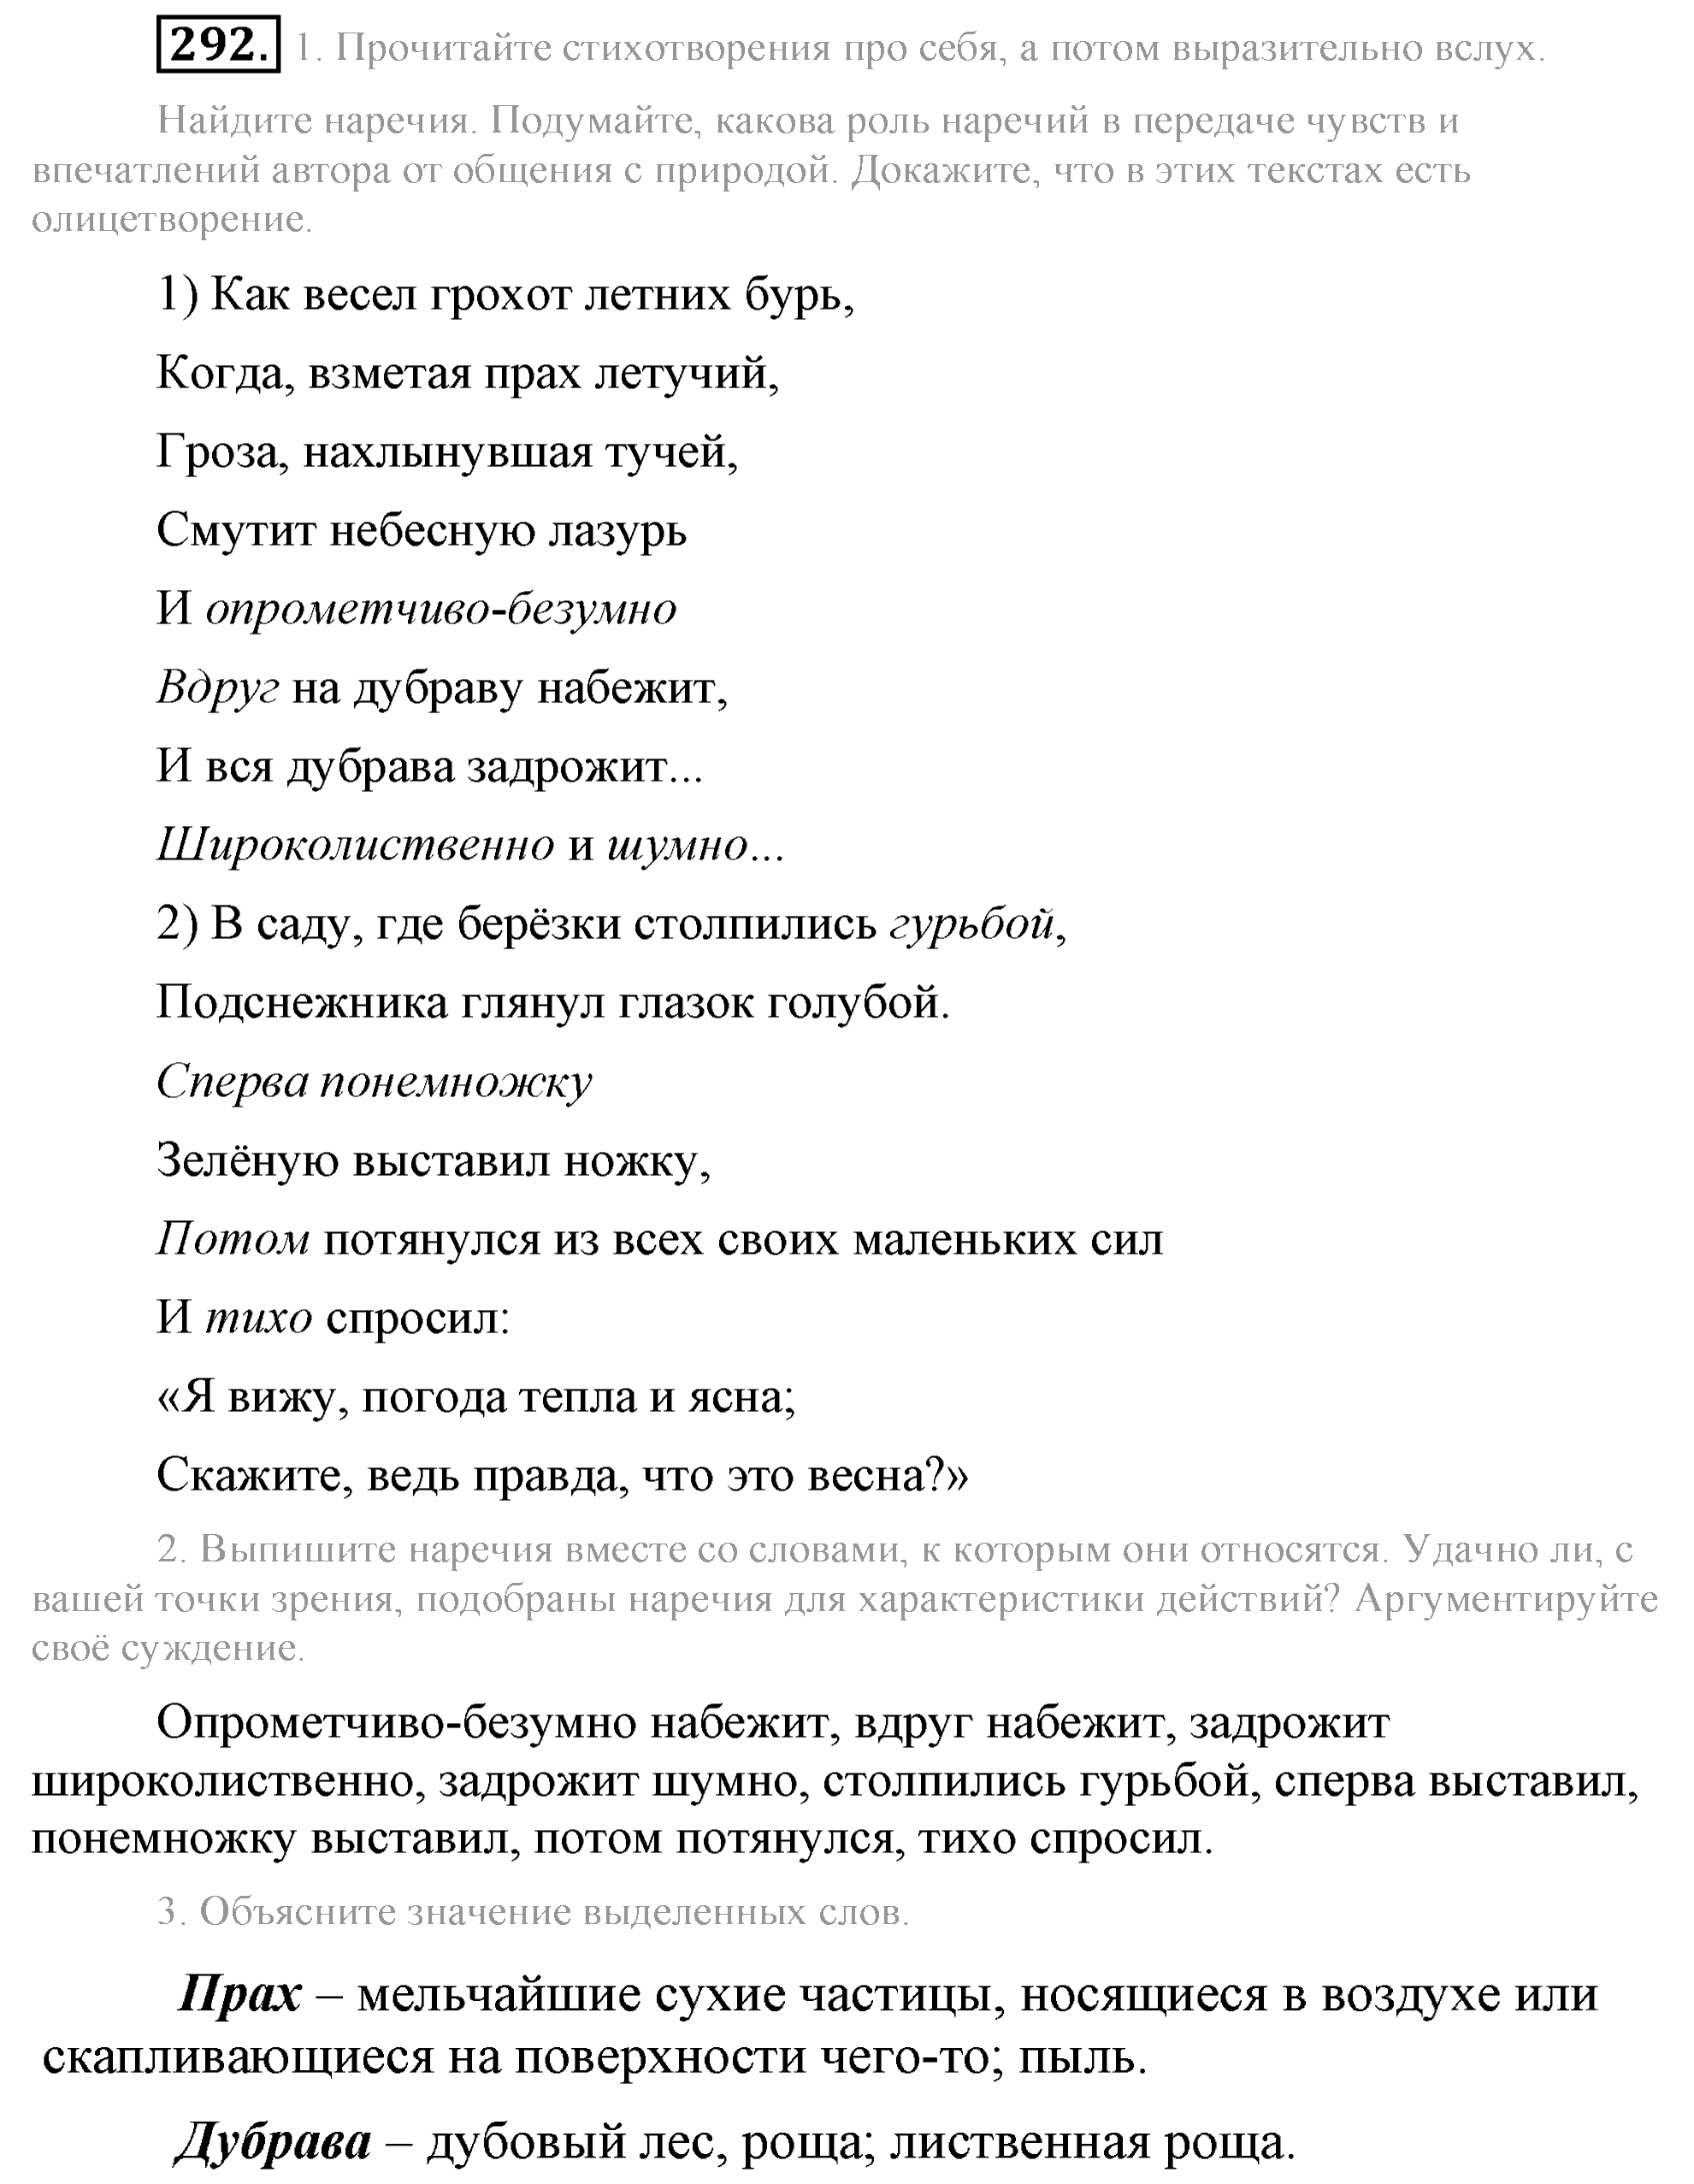 Практика, 7 класс, М.М. Разумовская, 2009, задача: 292